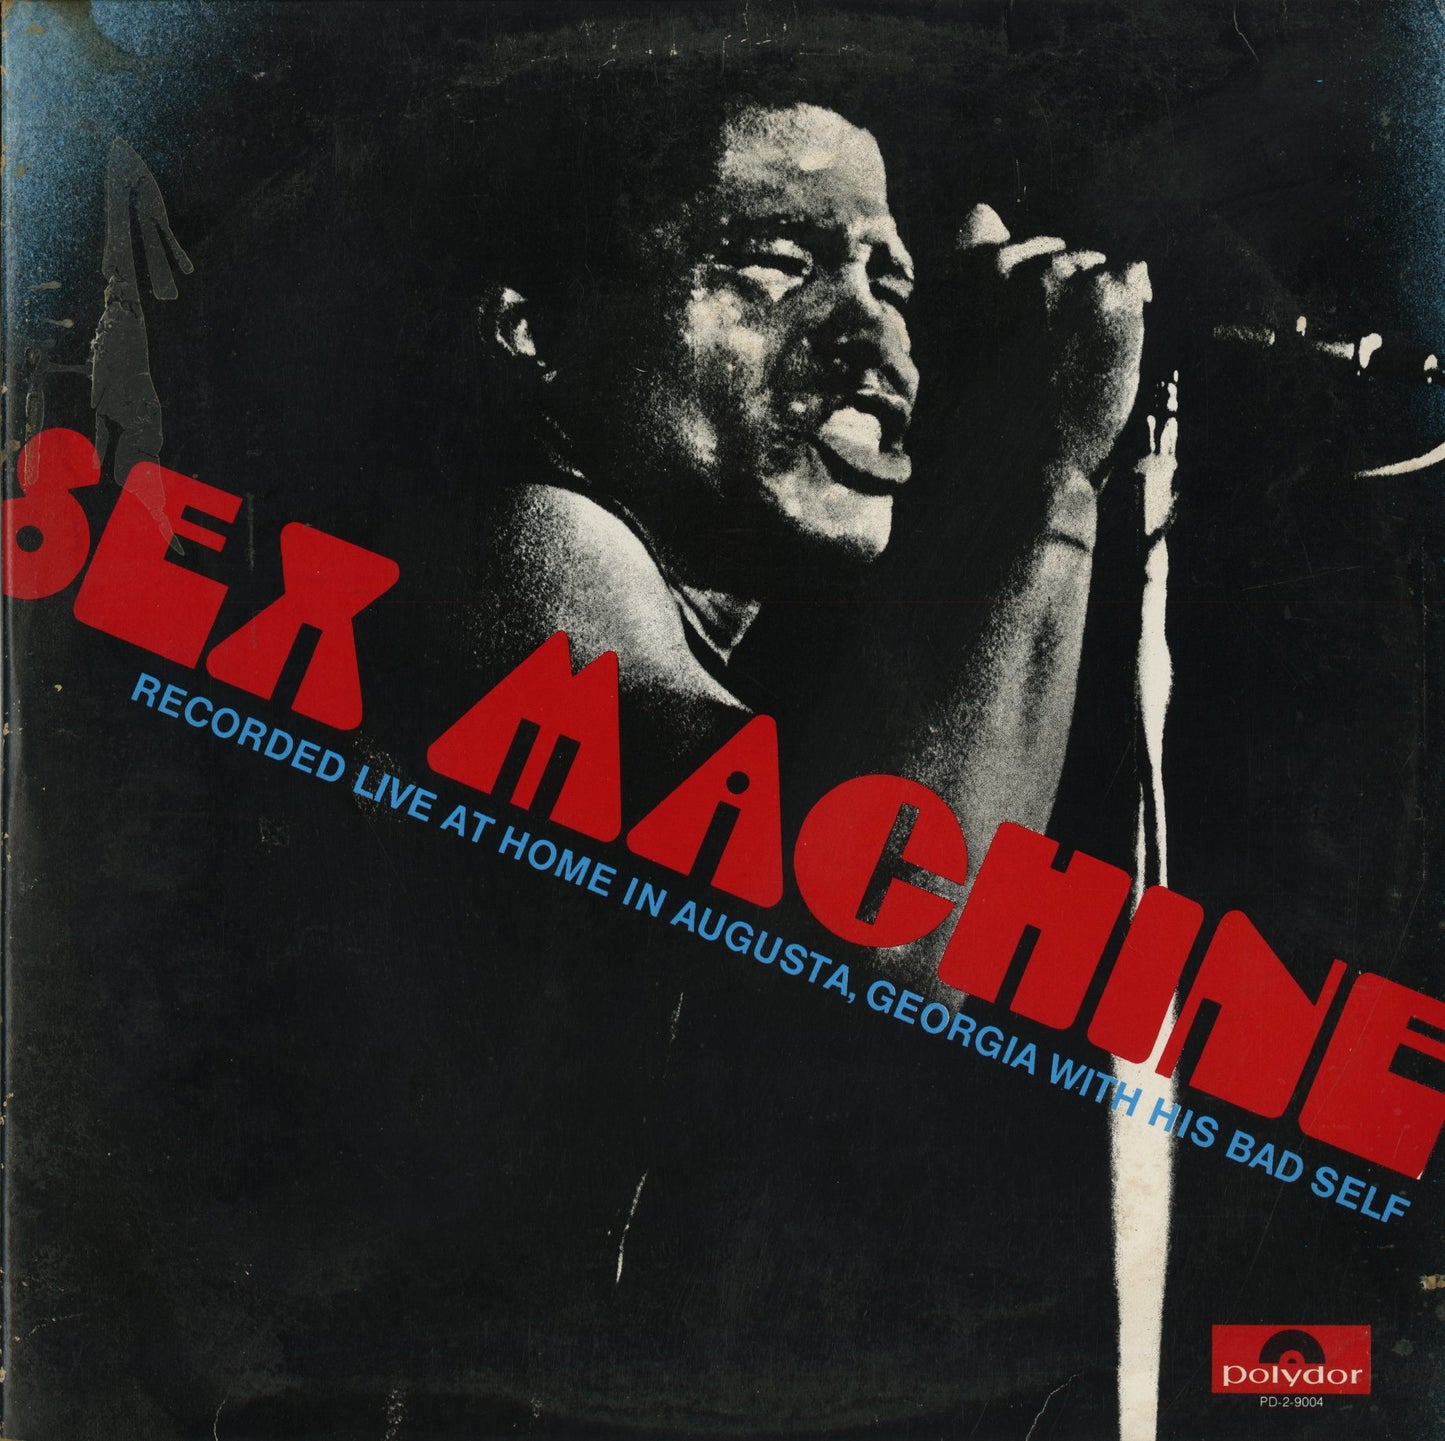 James Brown / ジェイムス・ブラウン / Sex Machine (PD-2-9004)